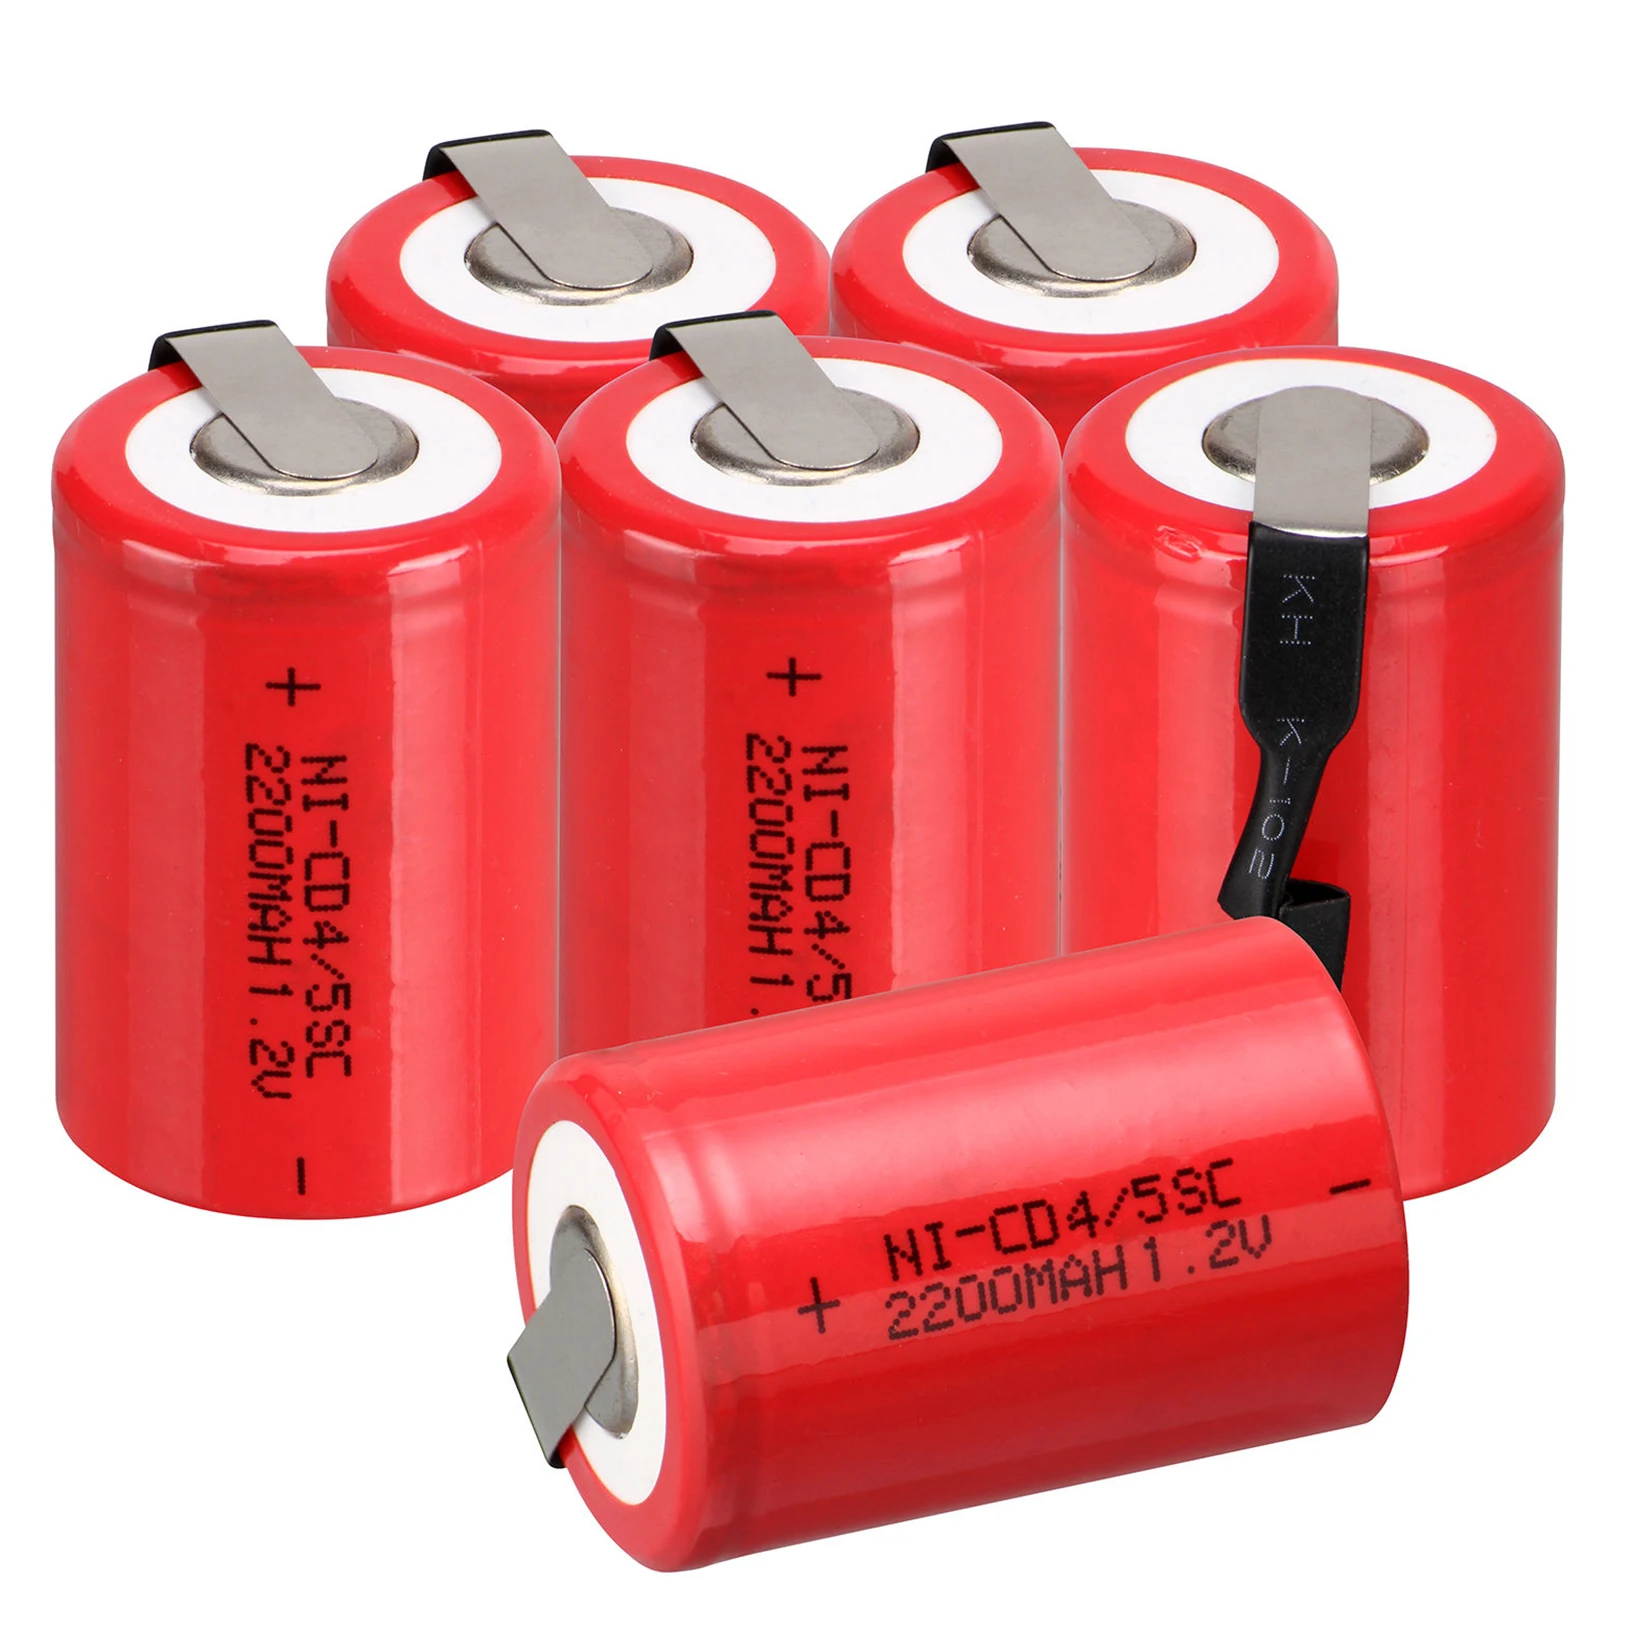  батареи это: -  батареи | Купить в .